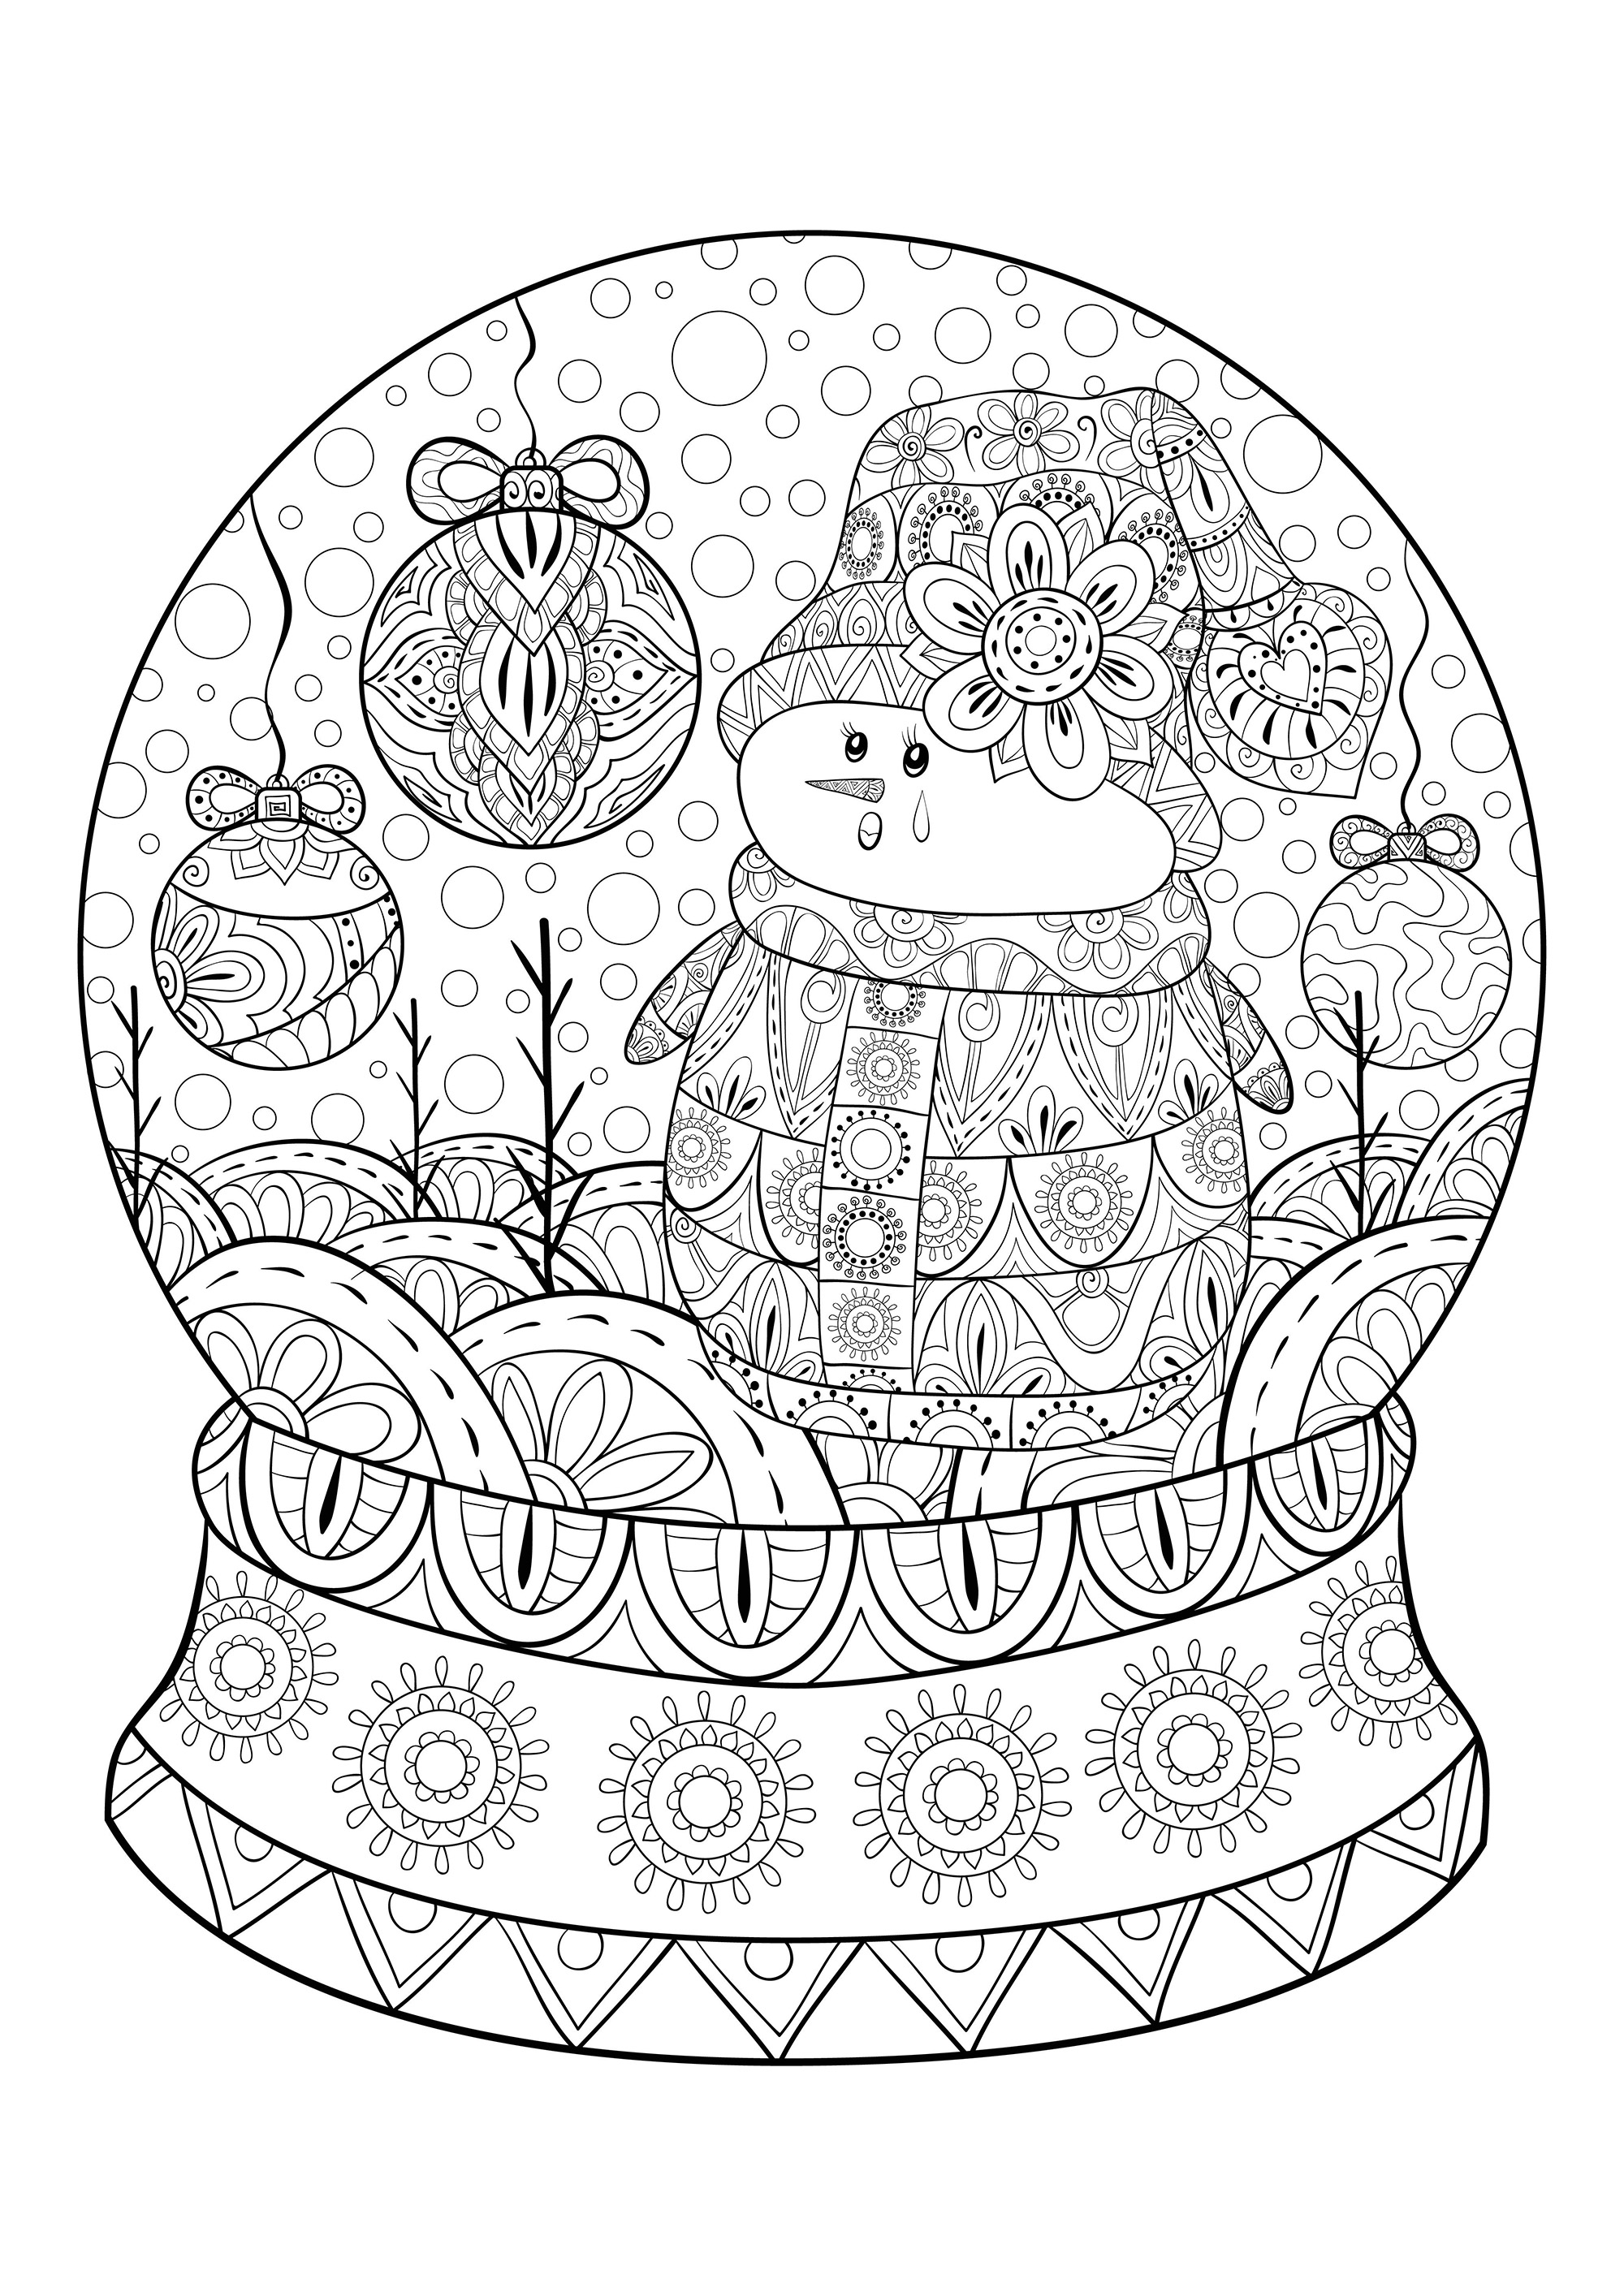 A Christmas snow globe featuring a snowman and Christmas decoration balls, Source : 123rf   Artist : Nonuzza